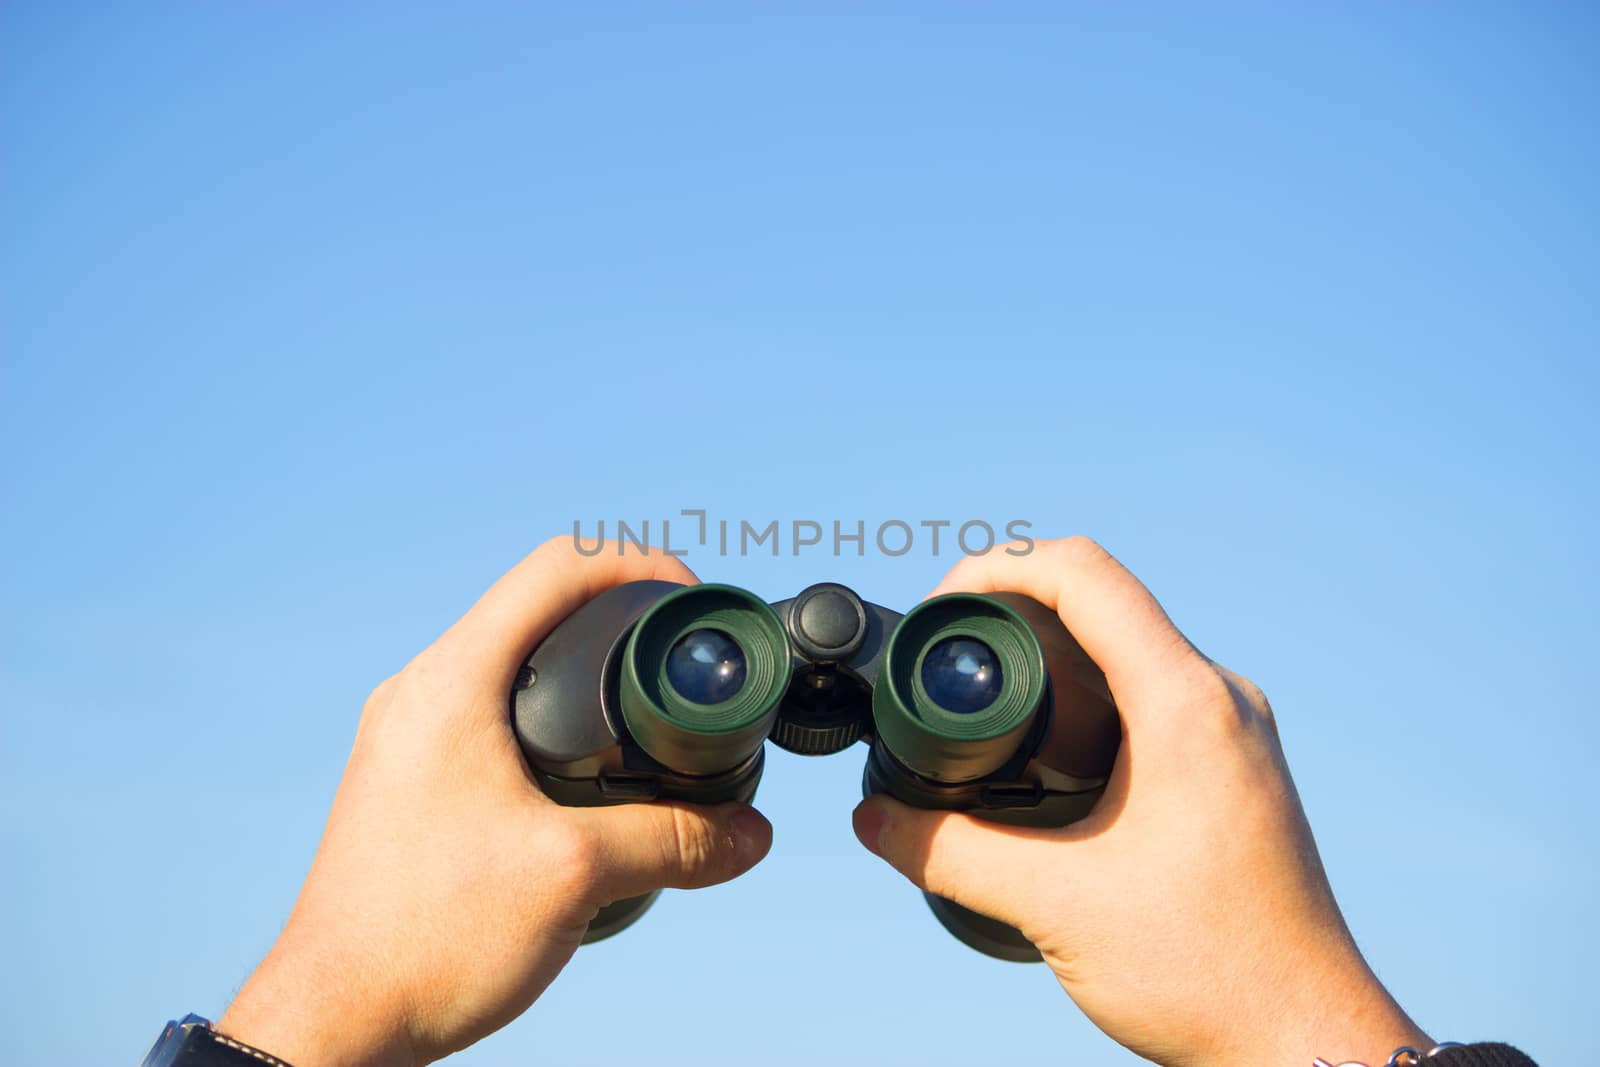 binocular in mans hands on the blue sky background